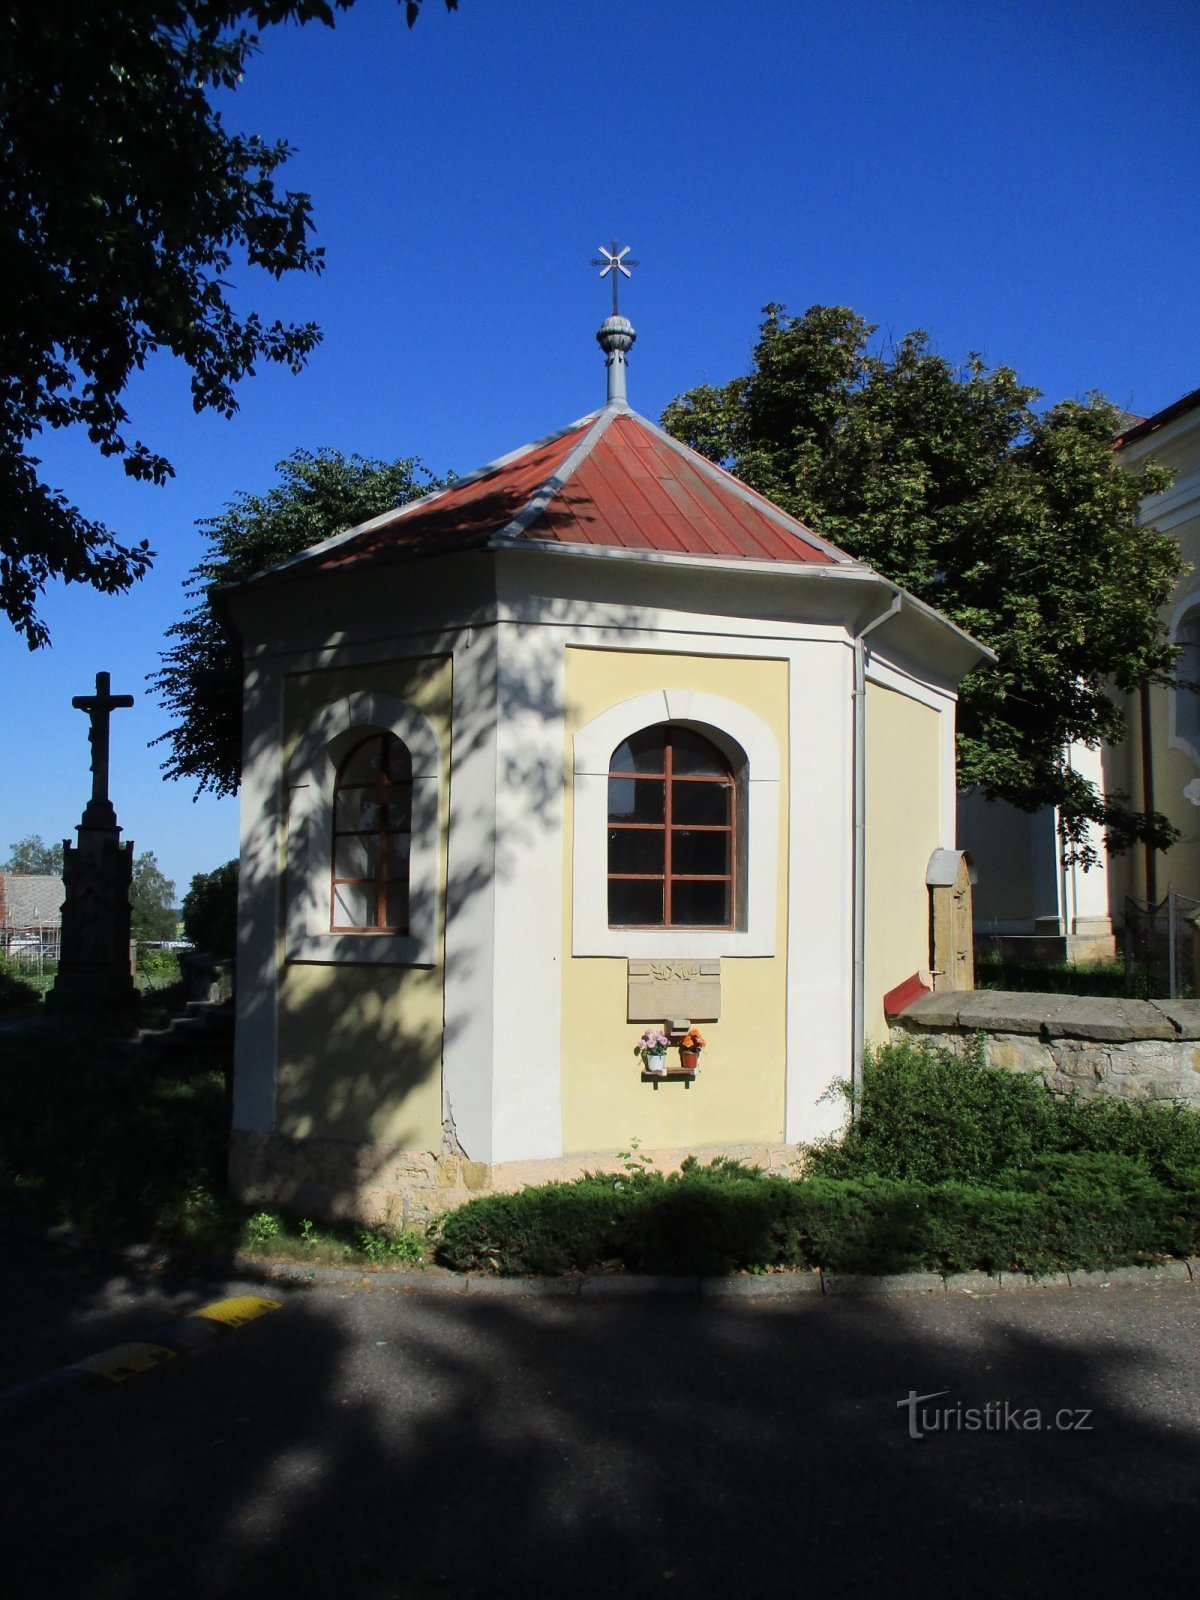 La morgue de la iglesia de St. Pedro y Pablo, apóstoles (Milovice)